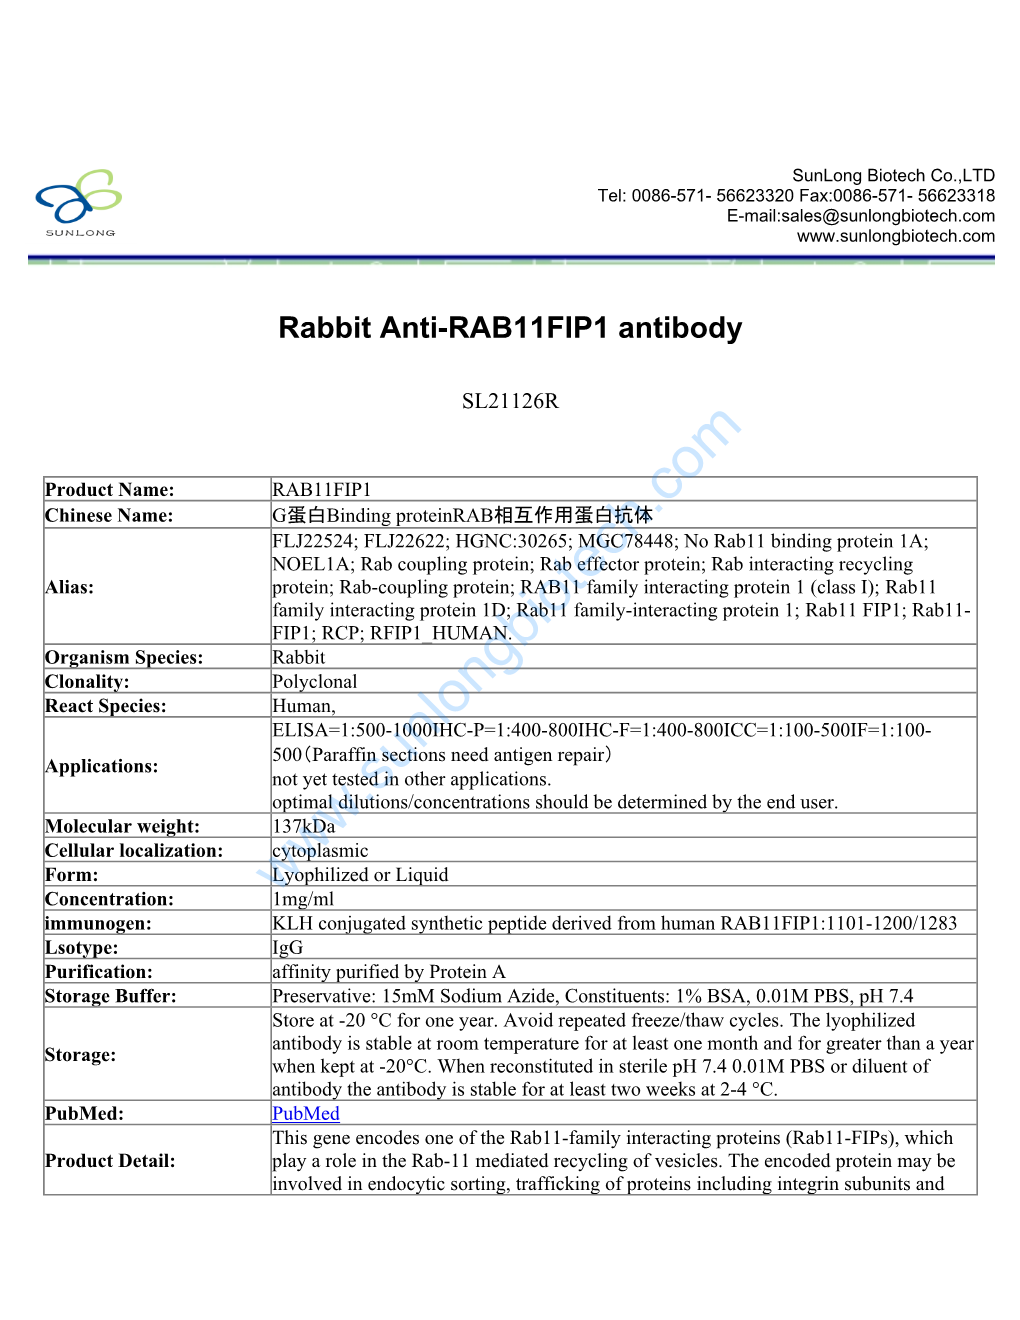 Rabbit Anti-RAB11FIP1 Antibody-SL21126R